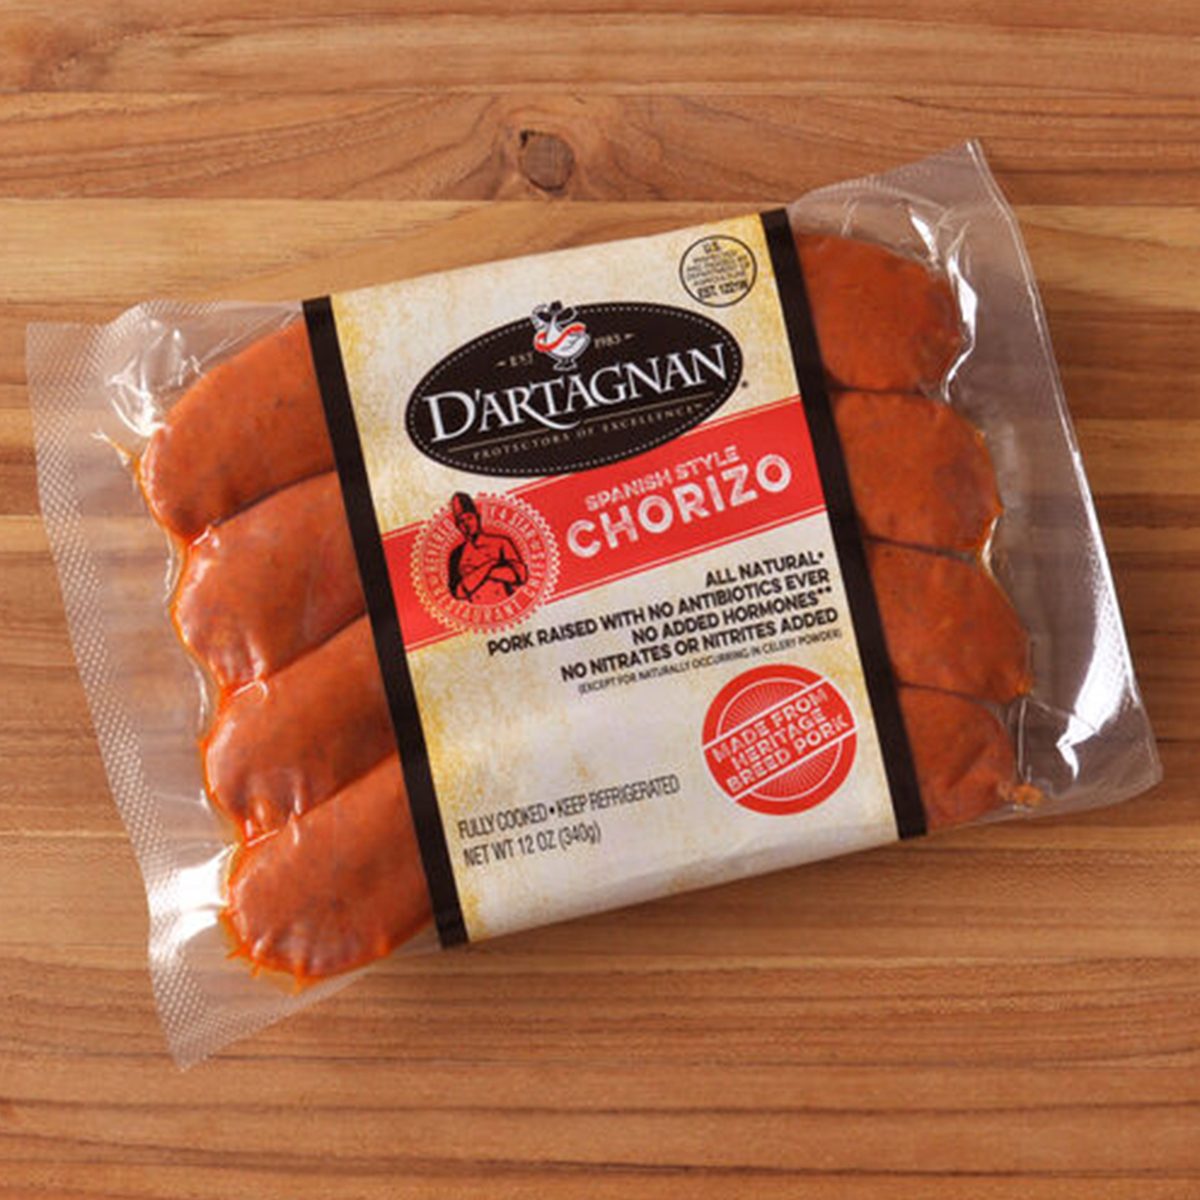 Spanish Chorizo for charcuterie